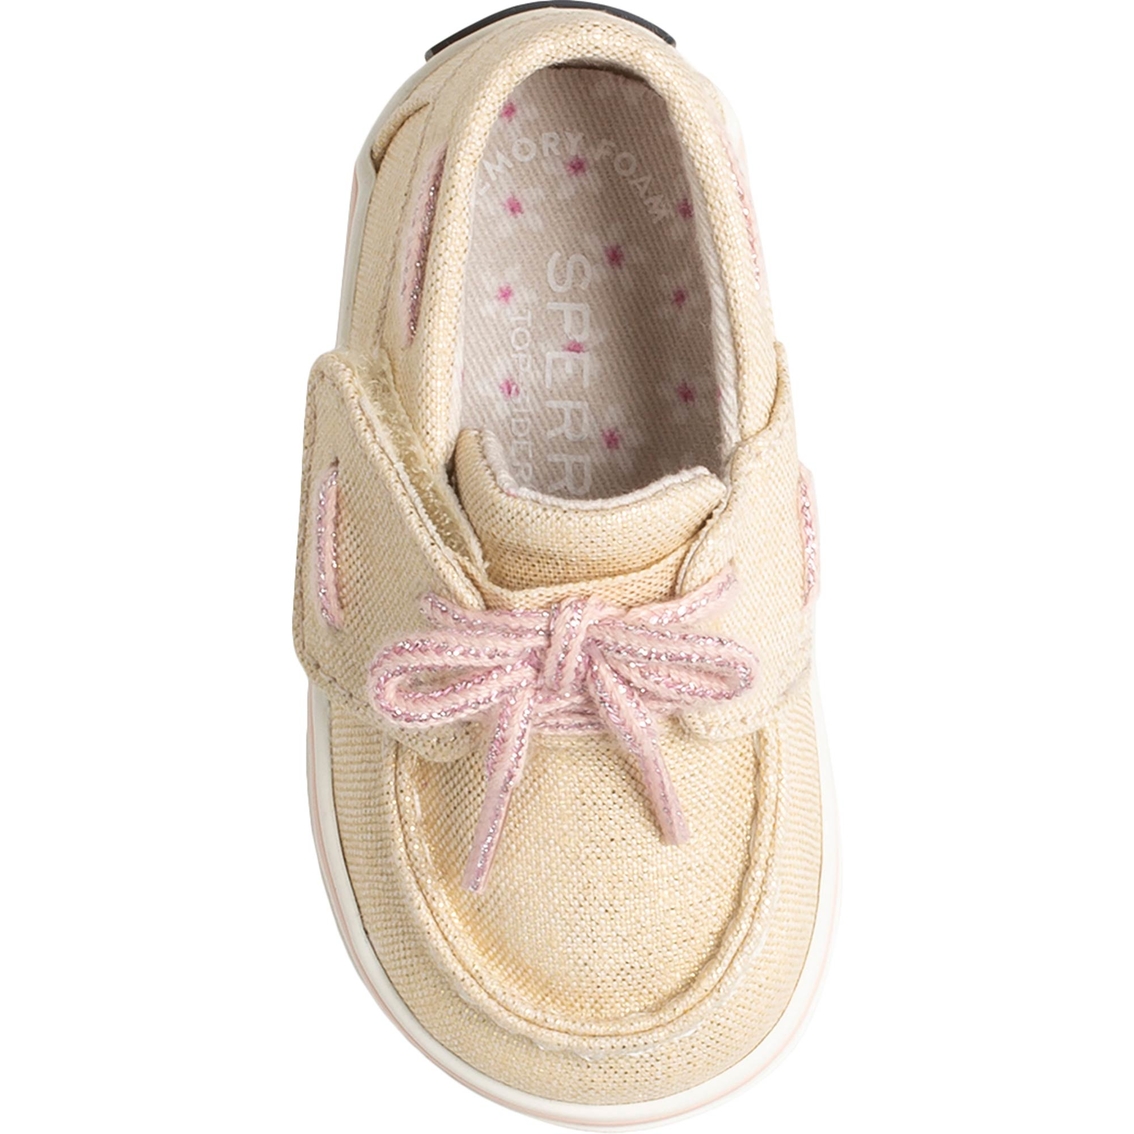 Sperry Infant Girls Intrepid Jr. Crib Shoes - Image 5 of 6